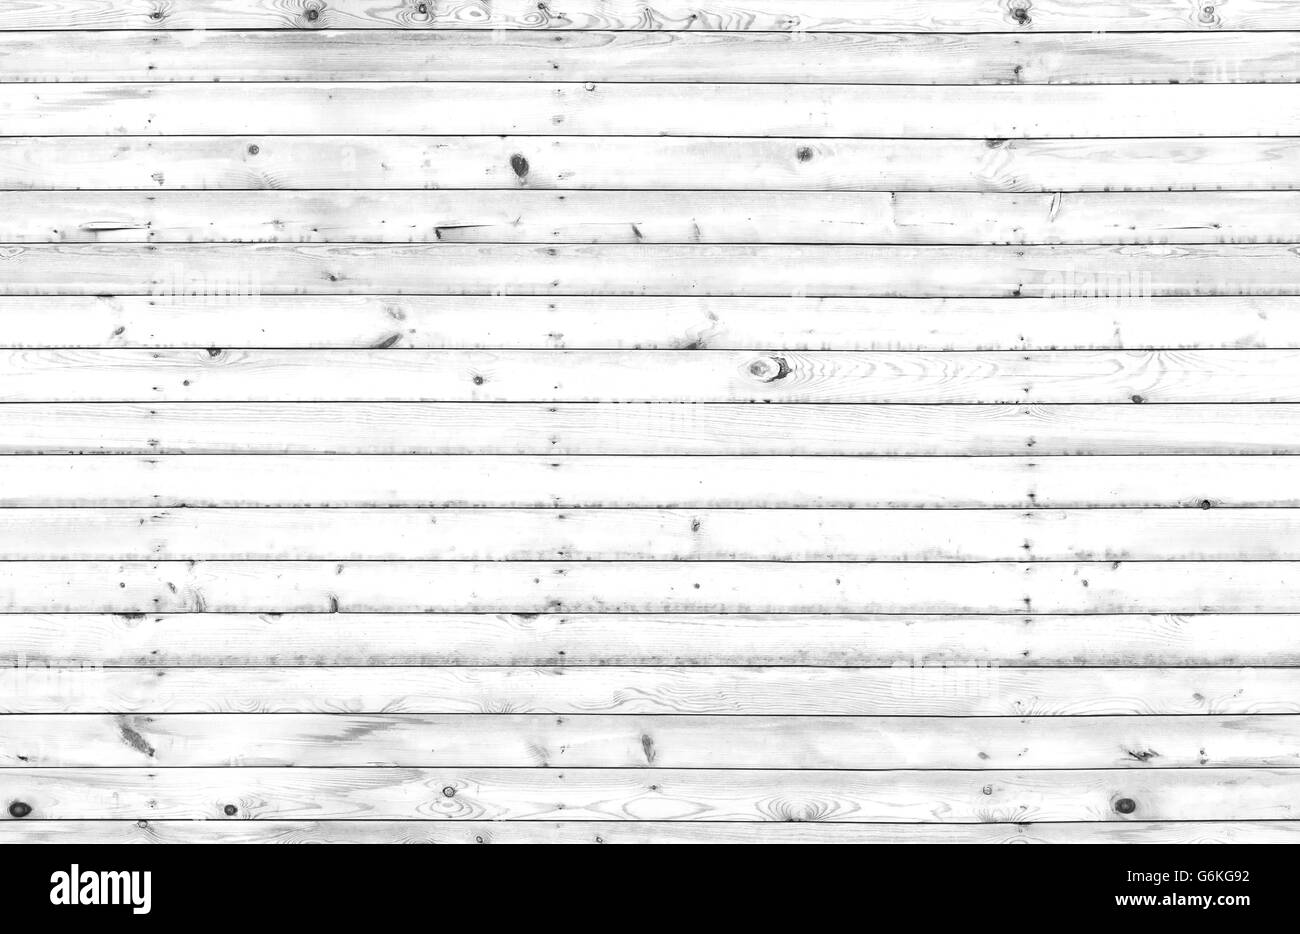 White wooden wall, seamless background photo texture Stock Photo